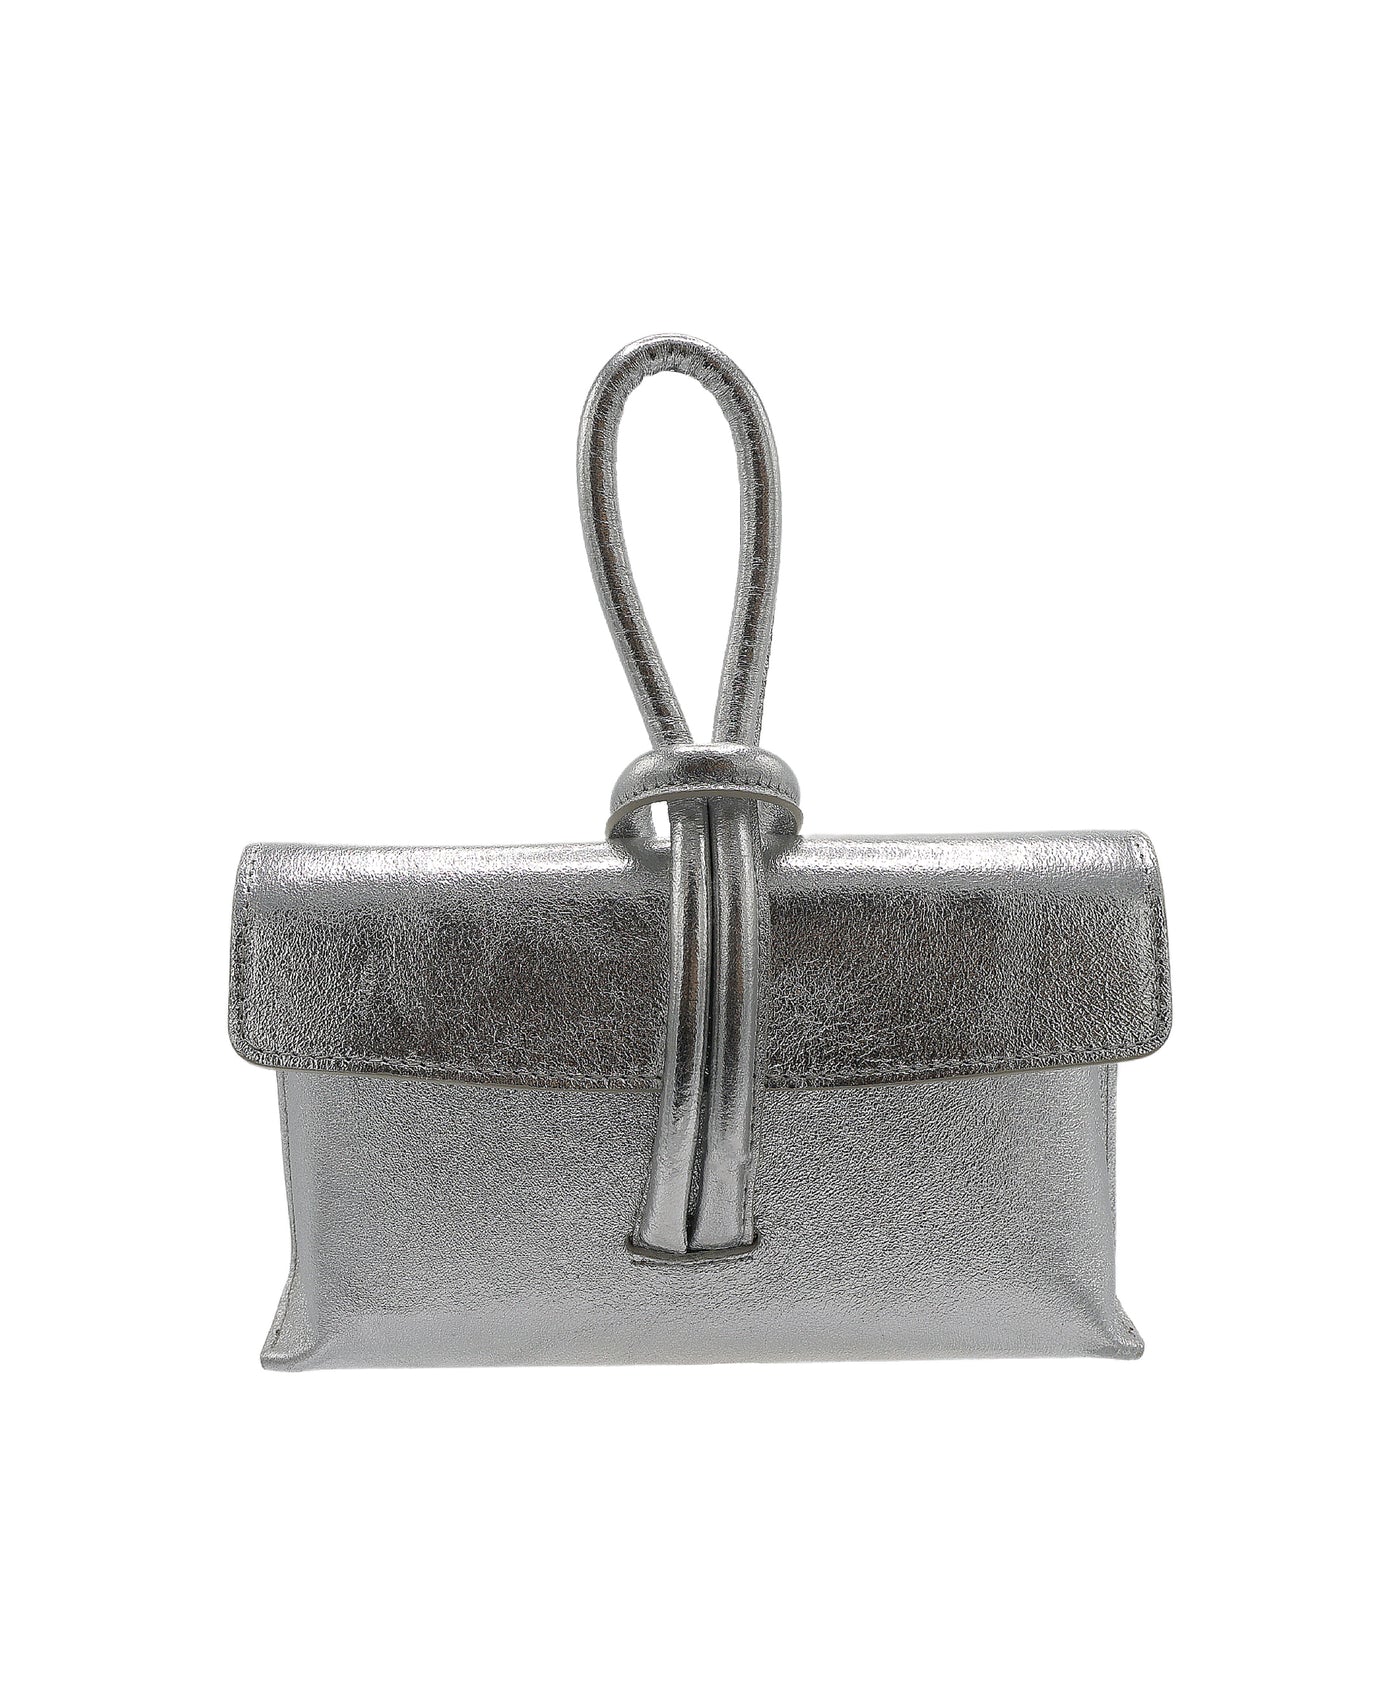 Leather Loop Handle Handbag image 1